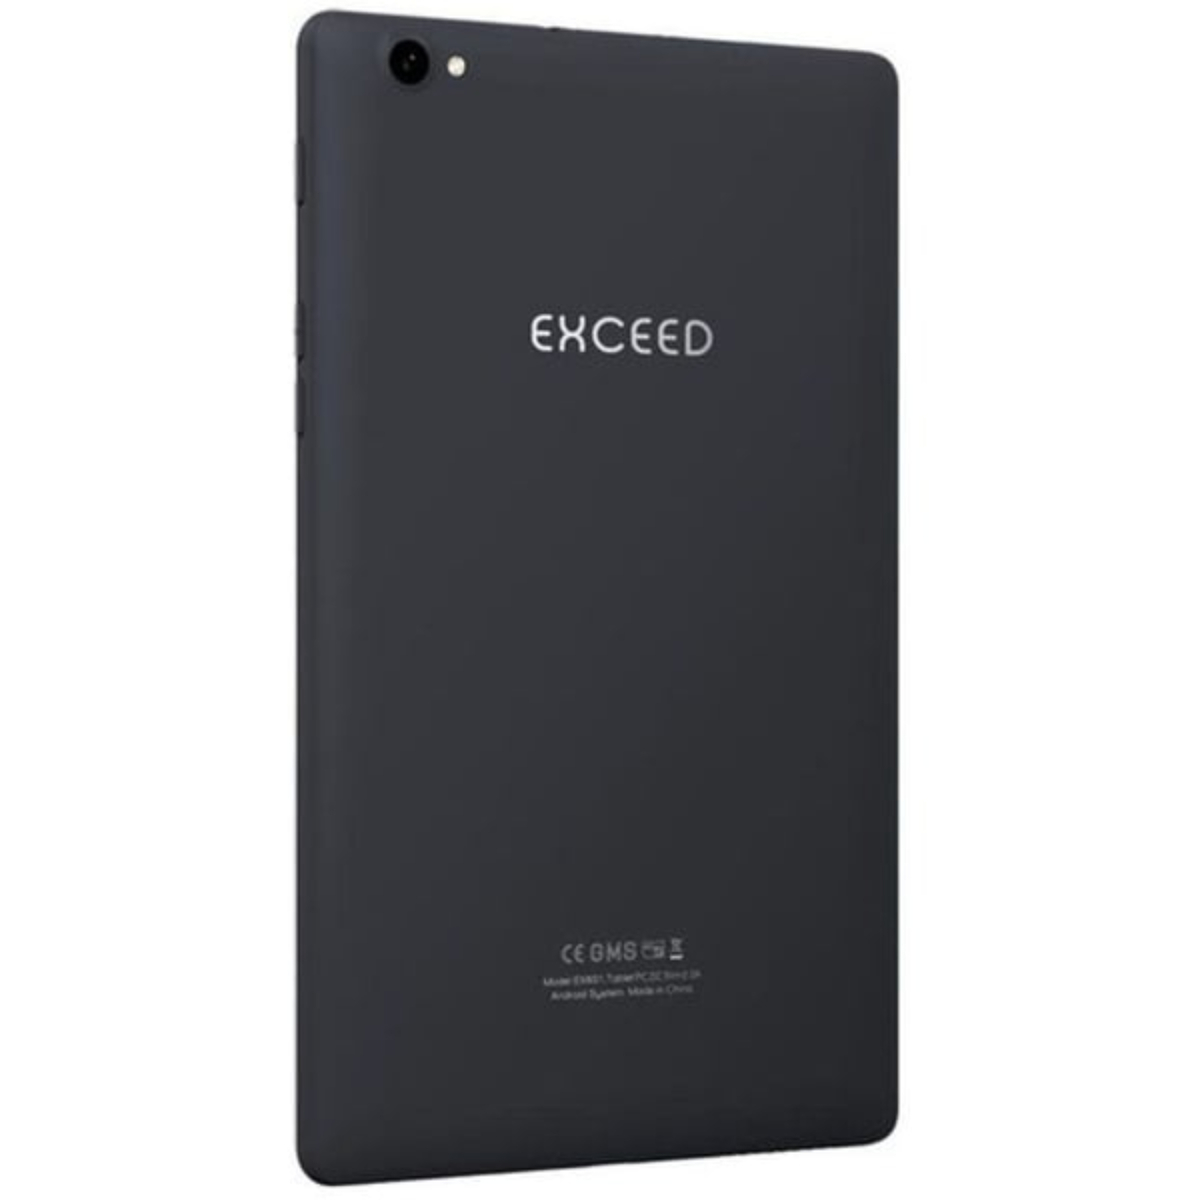 Exceed Magna 8 inch 4G Tablet, 3 GB RAM, 32 GB Internal Storage, Black, EX8S1